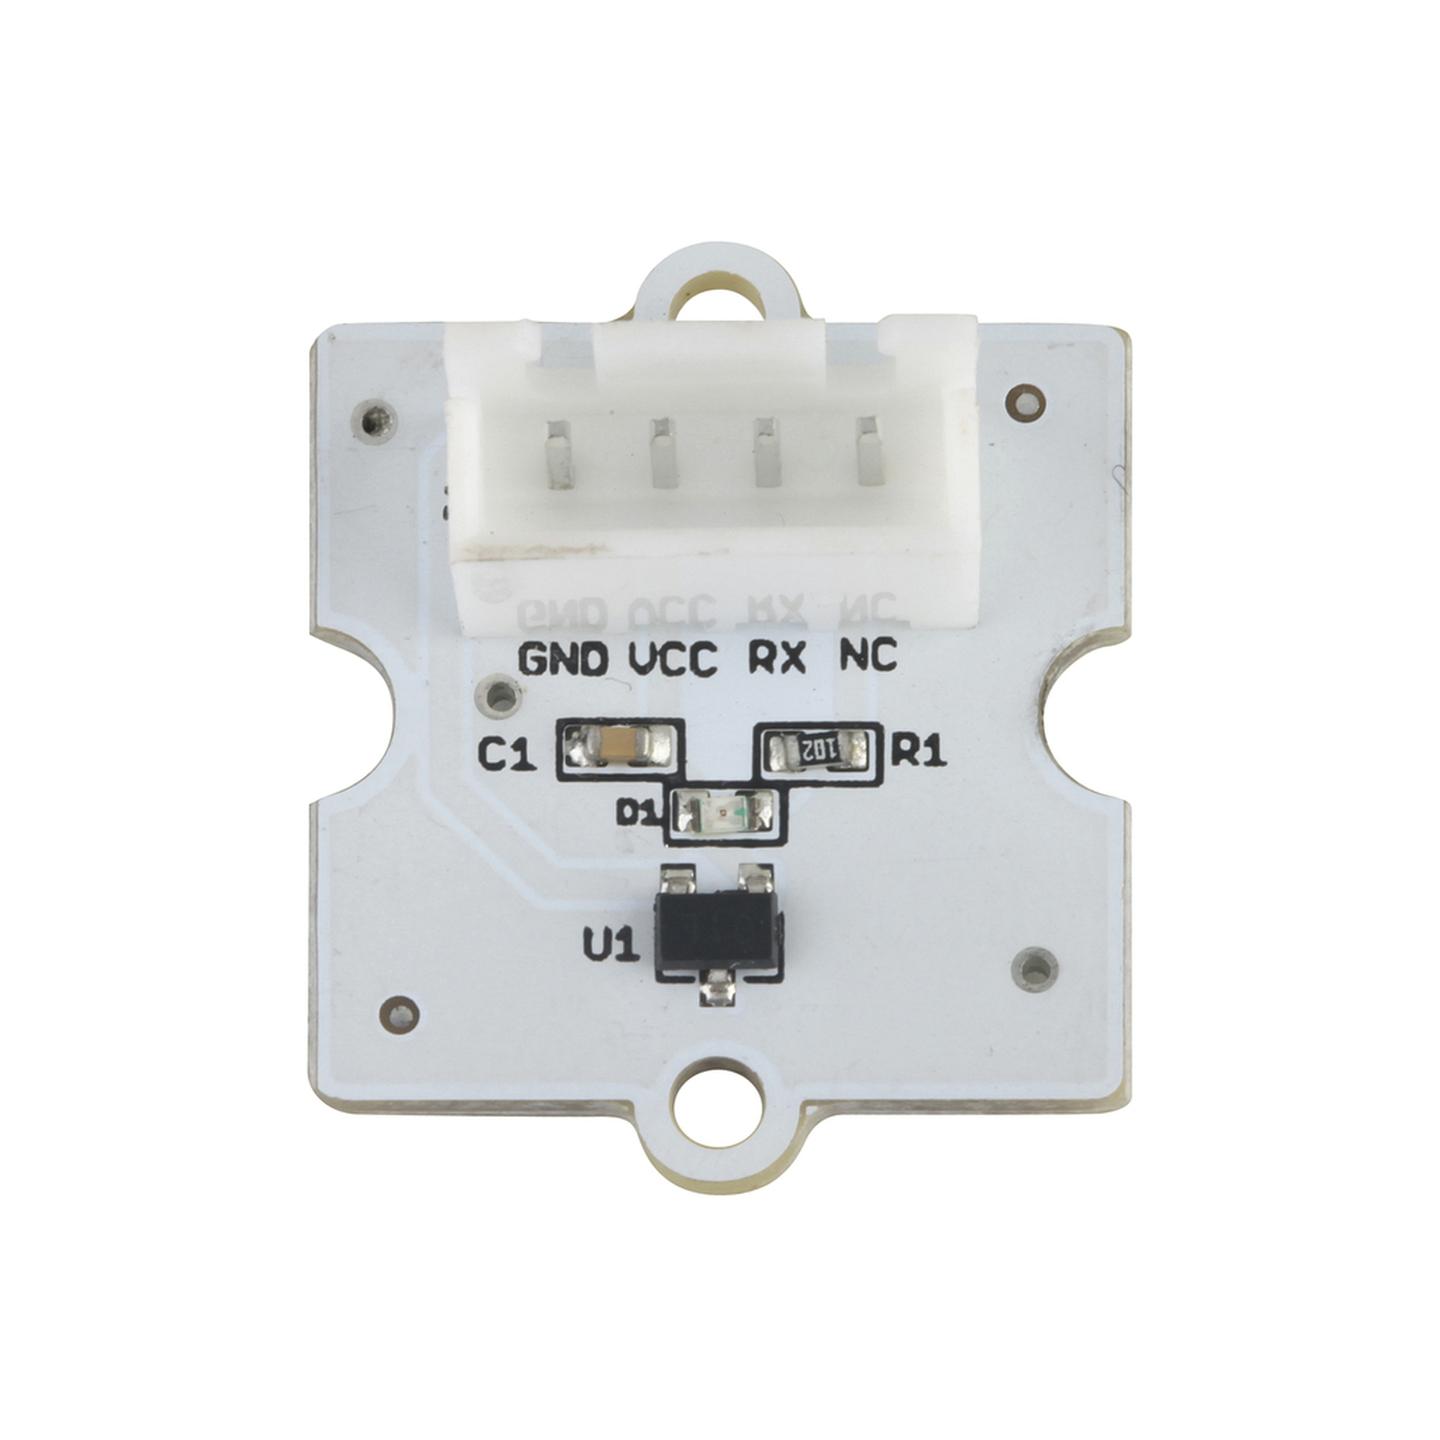 Linker Hall Sensor for Arduino